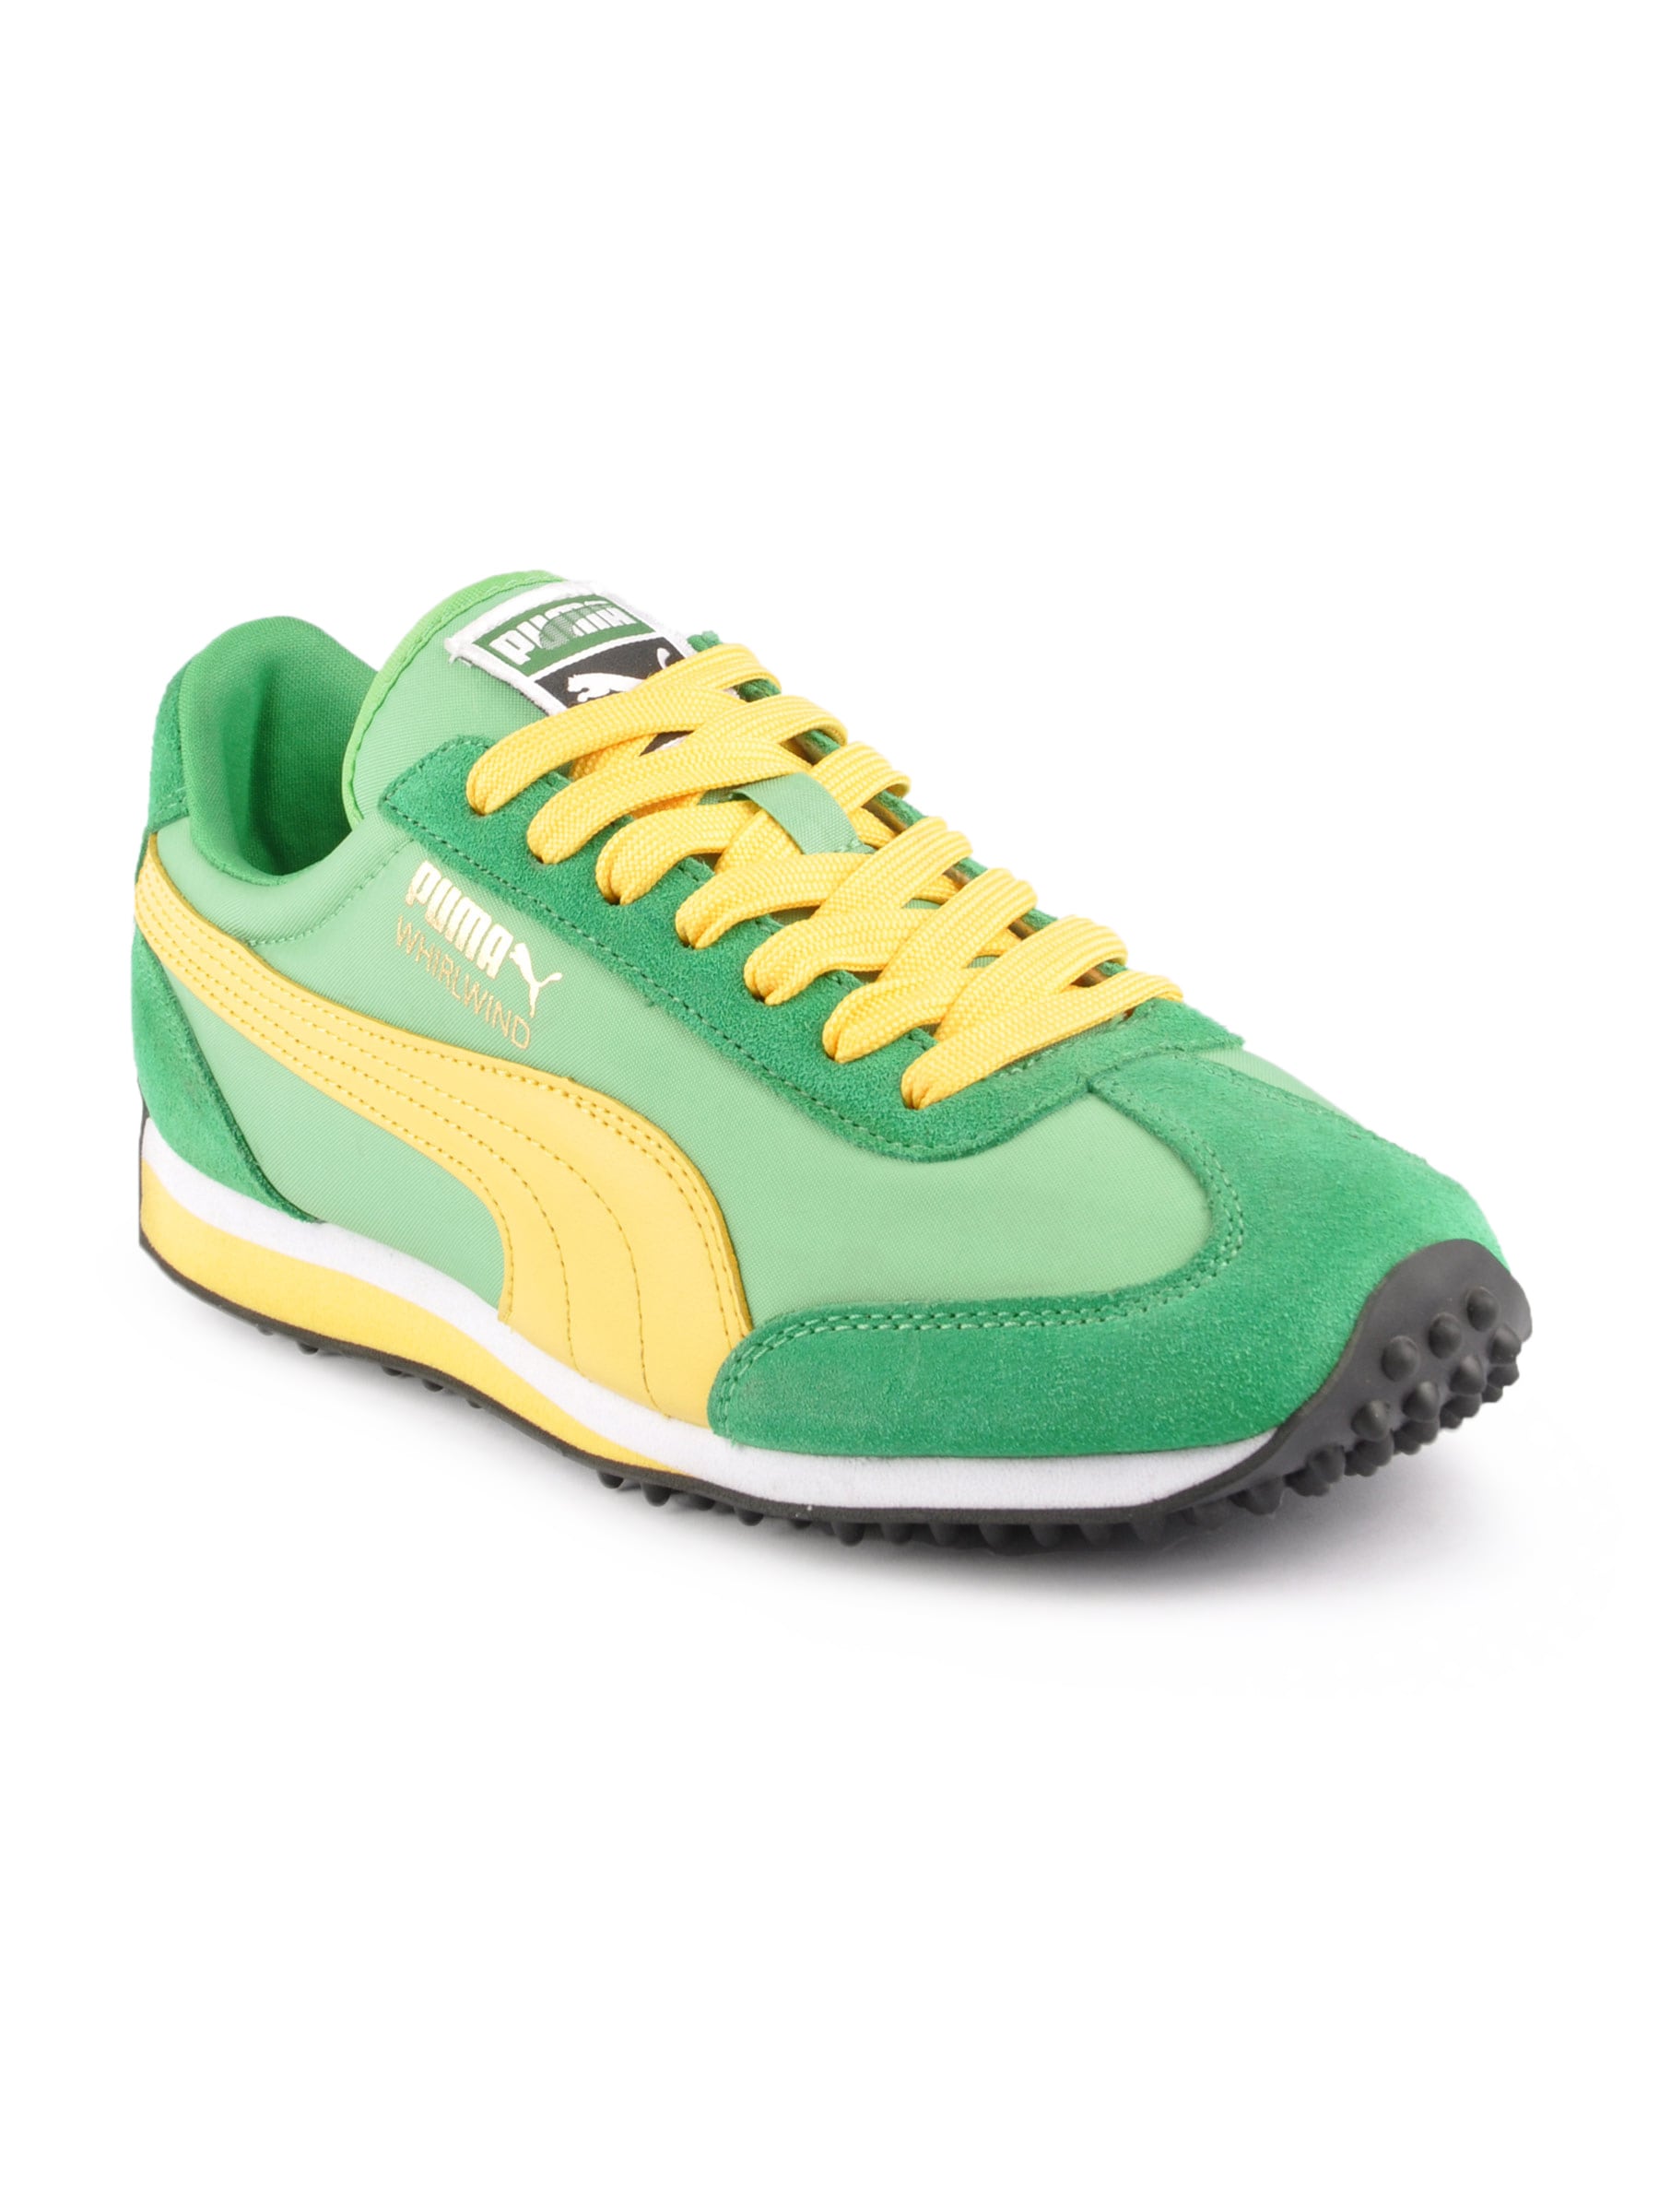 Puma Men Whirlwind Classic Green Casual Shoes